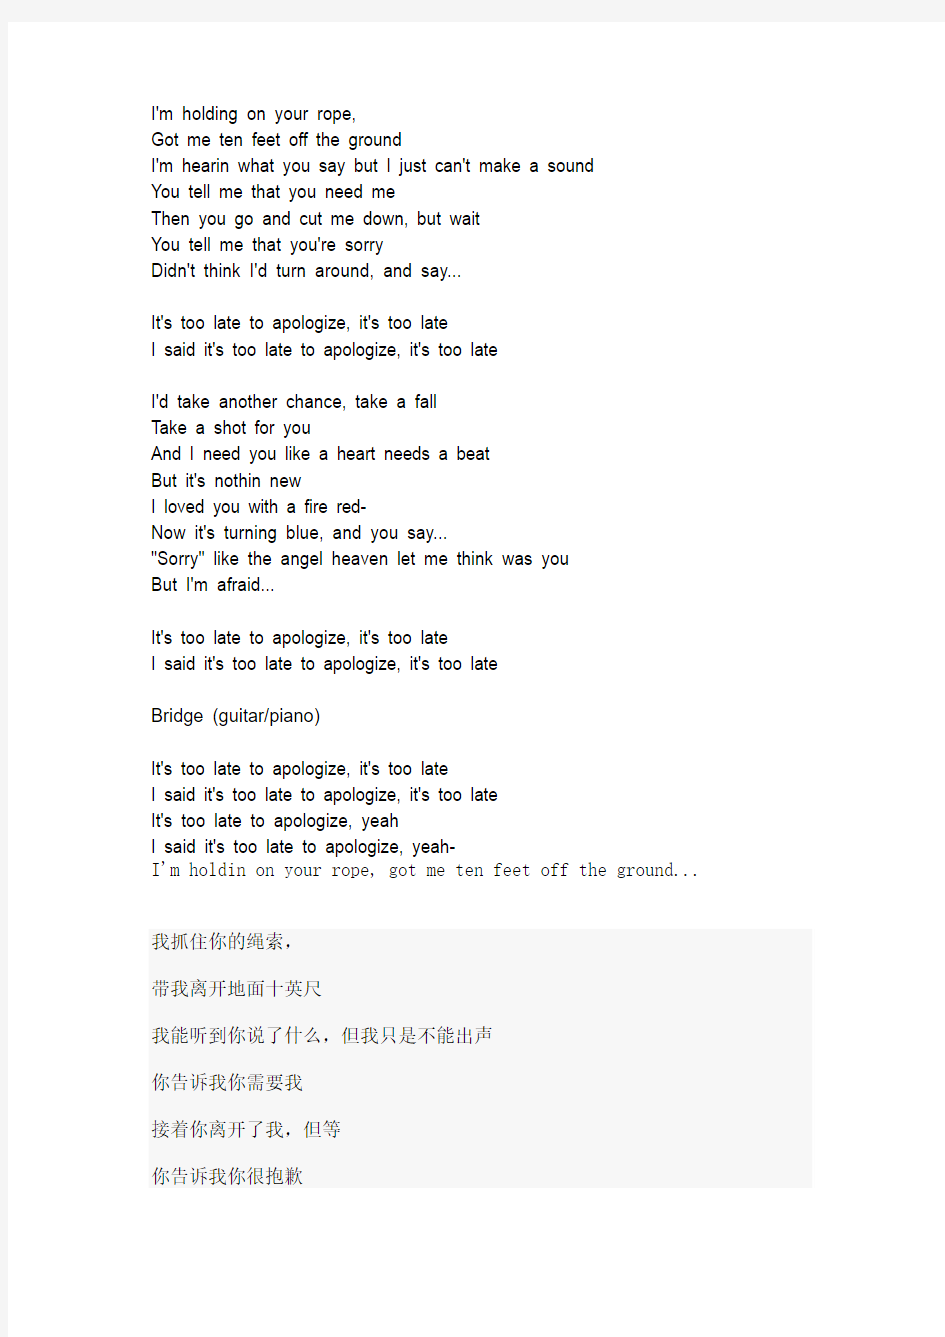 apologize的歌词和中文意思